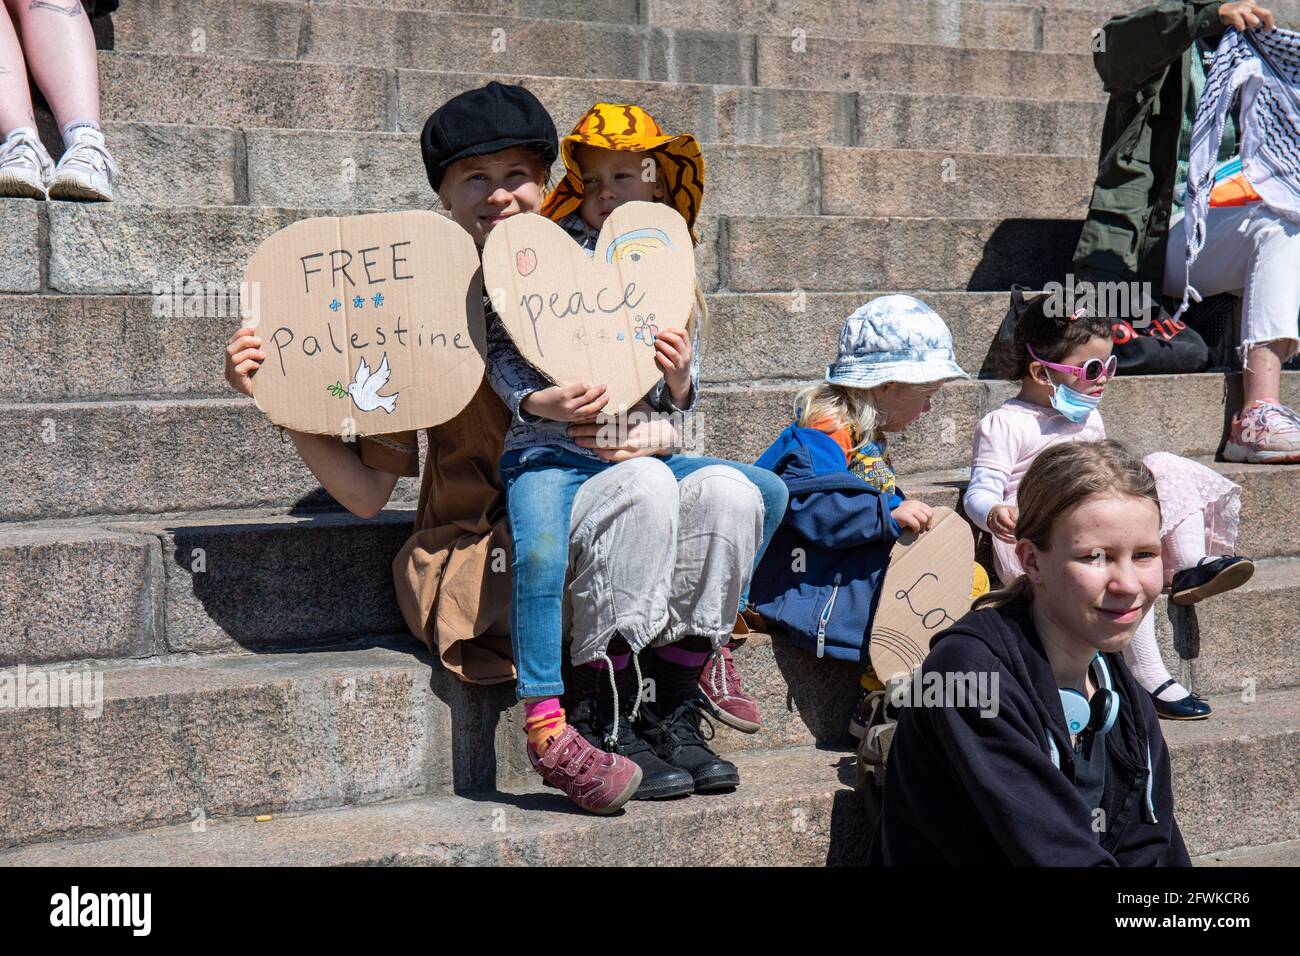 Woman with children demonstrating on behalf of Palestine in Helsinki, Finland Stock Photo